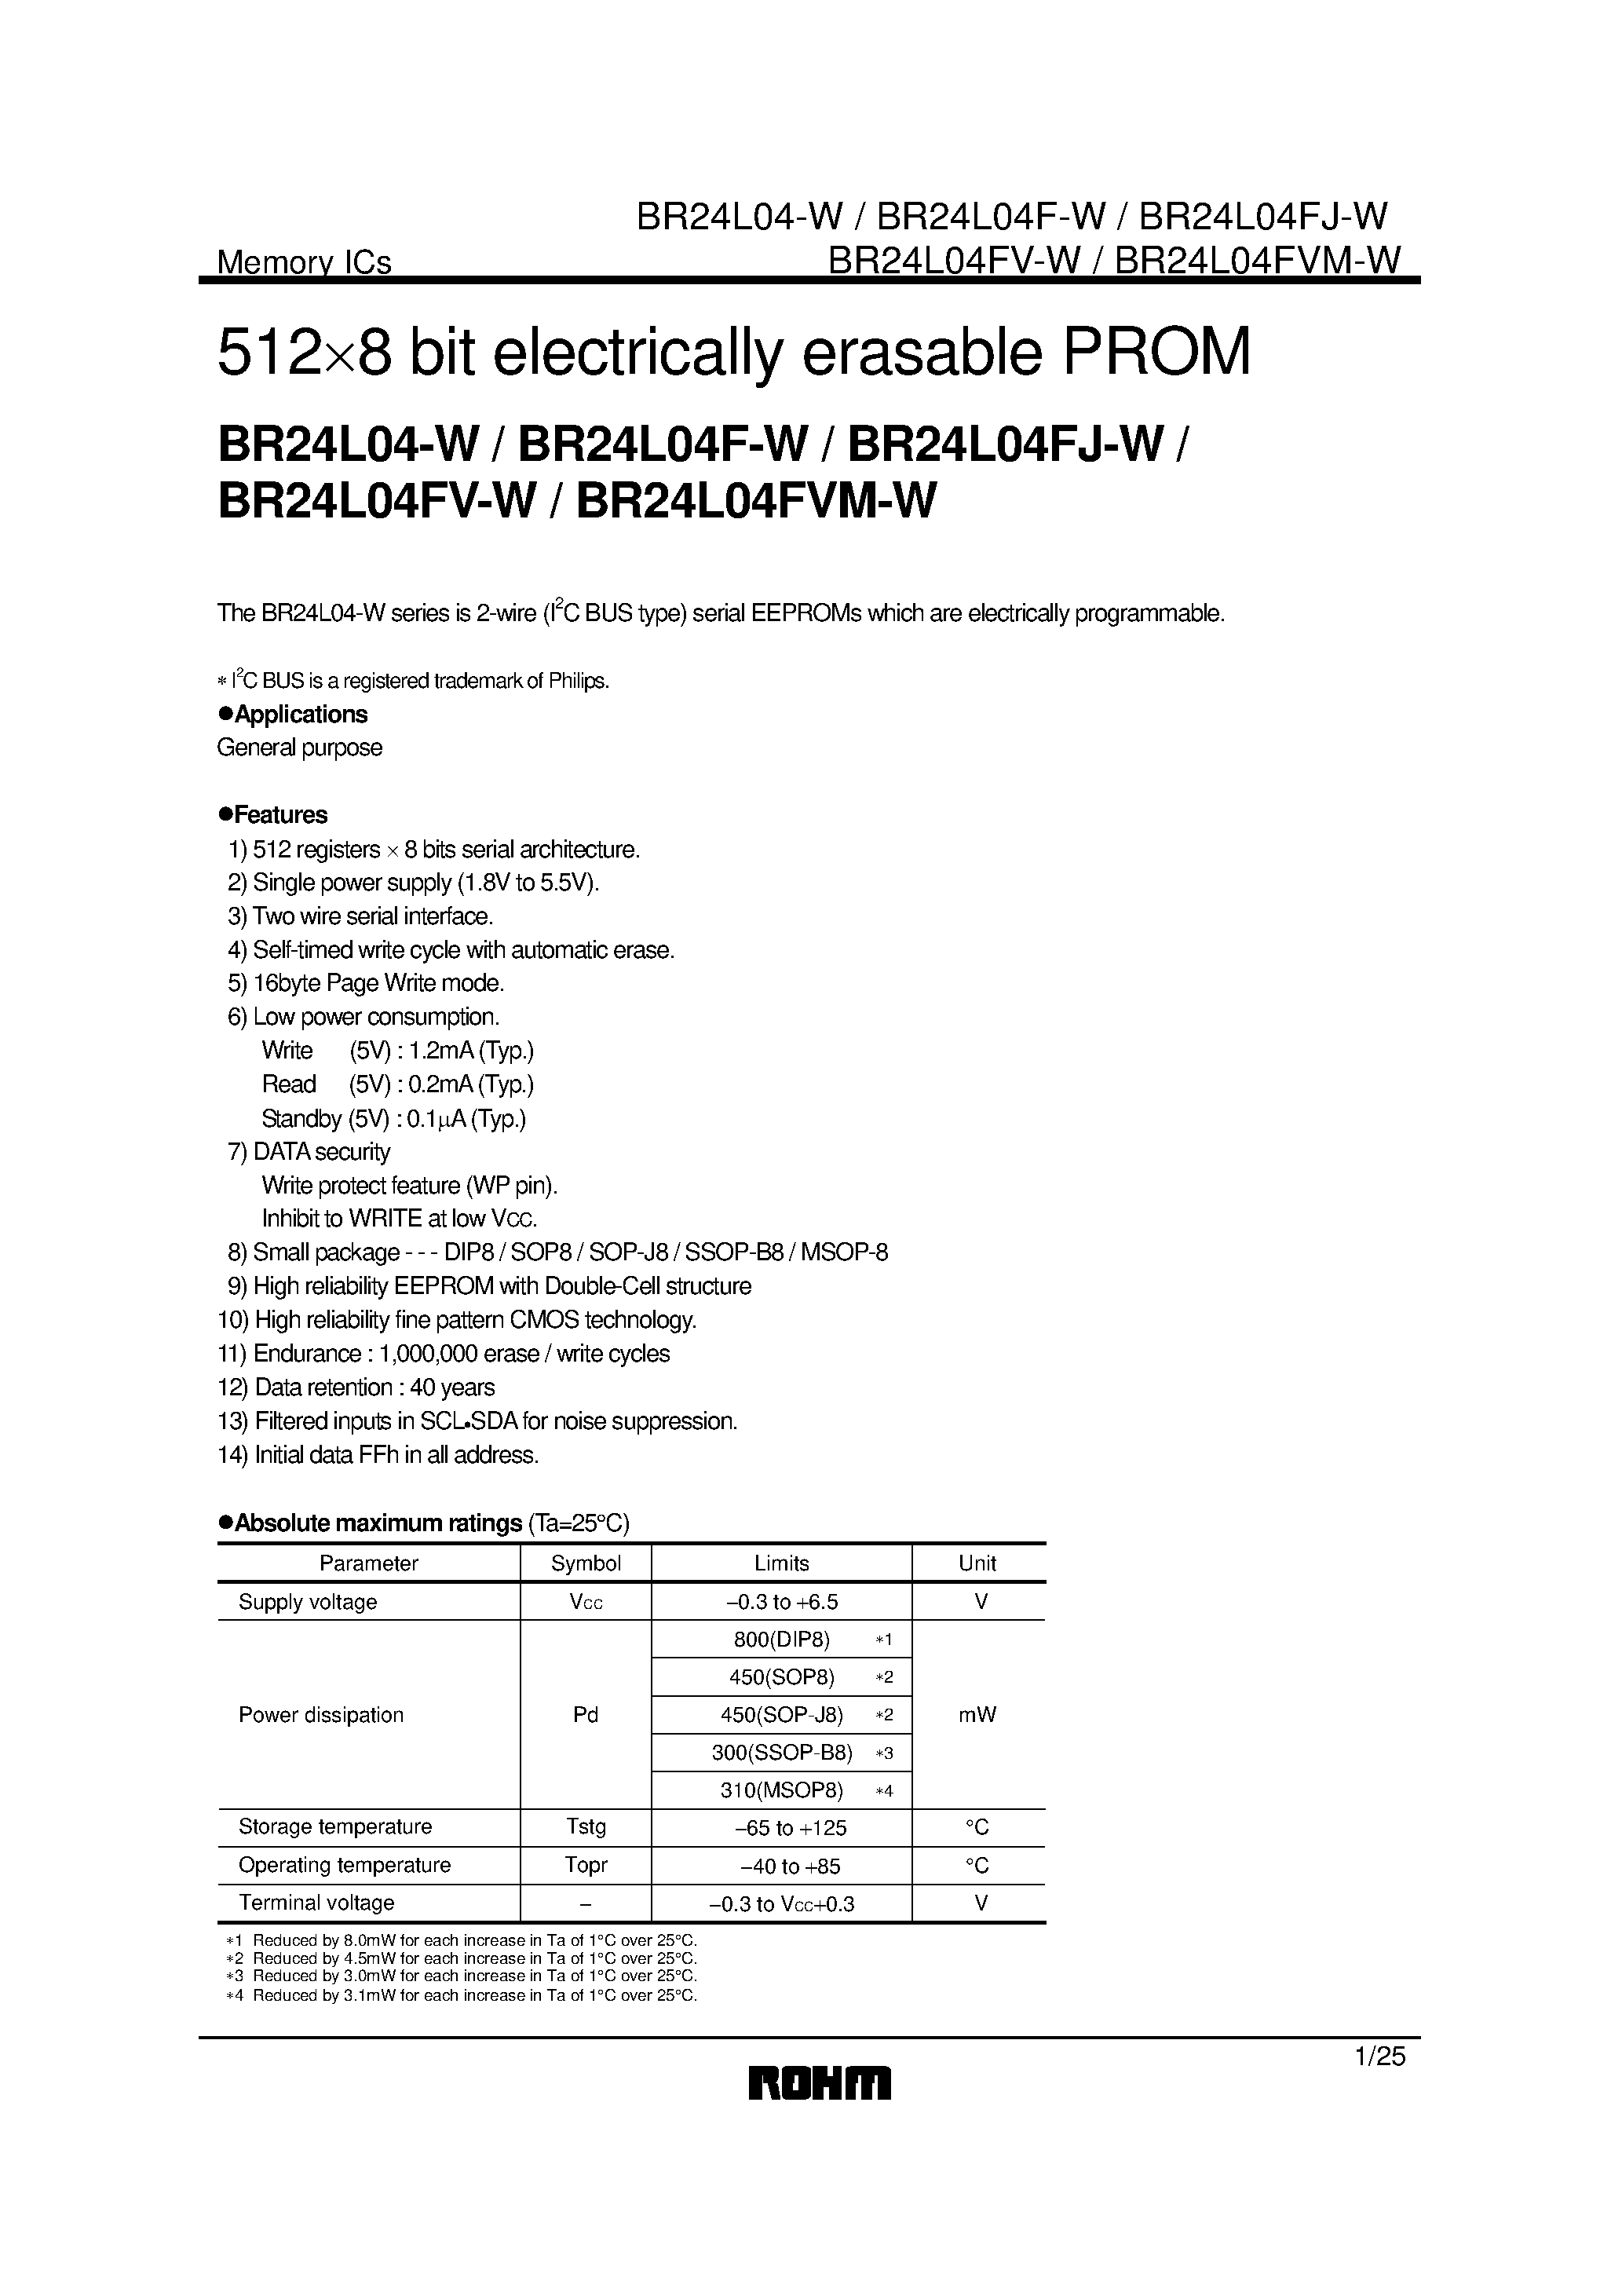 Даташит BR24L04FV-W - 5128 bit electrically erasable PROM страница 1